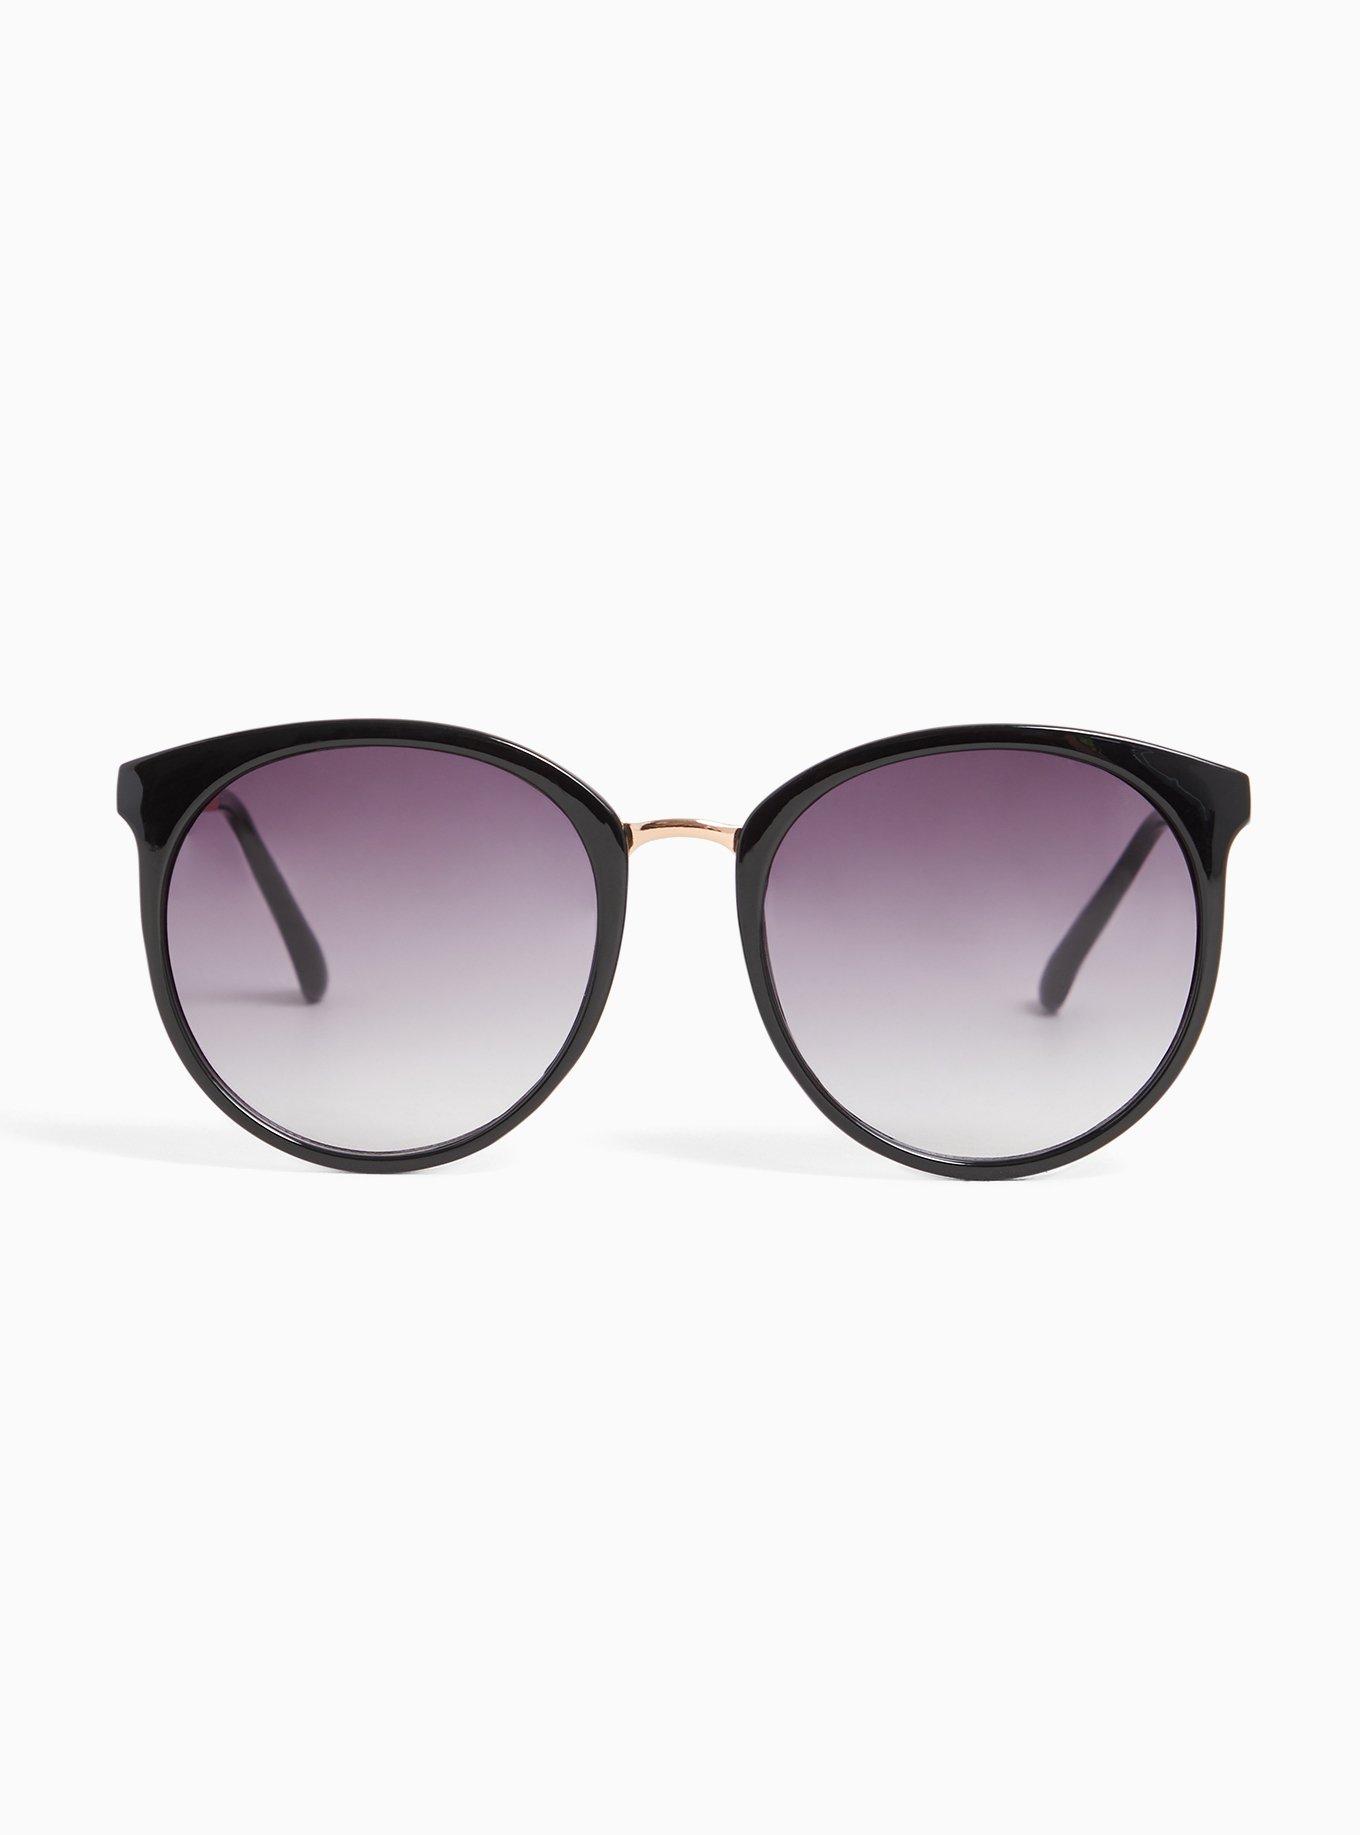 Plus Size - Black Rounded Cat Eye Sunglasses - Torrid